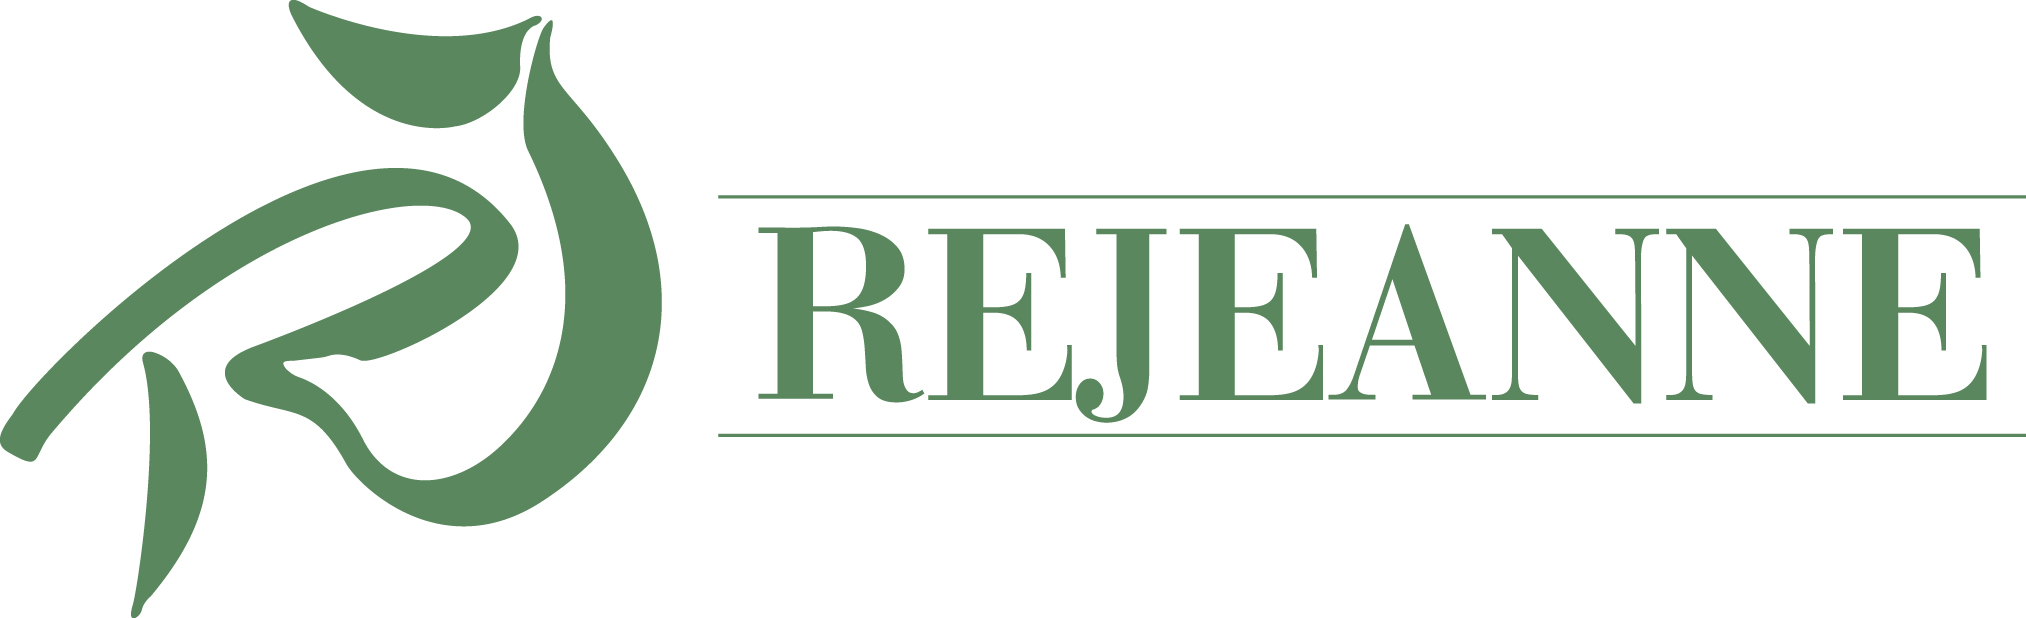 Rejeanne logo